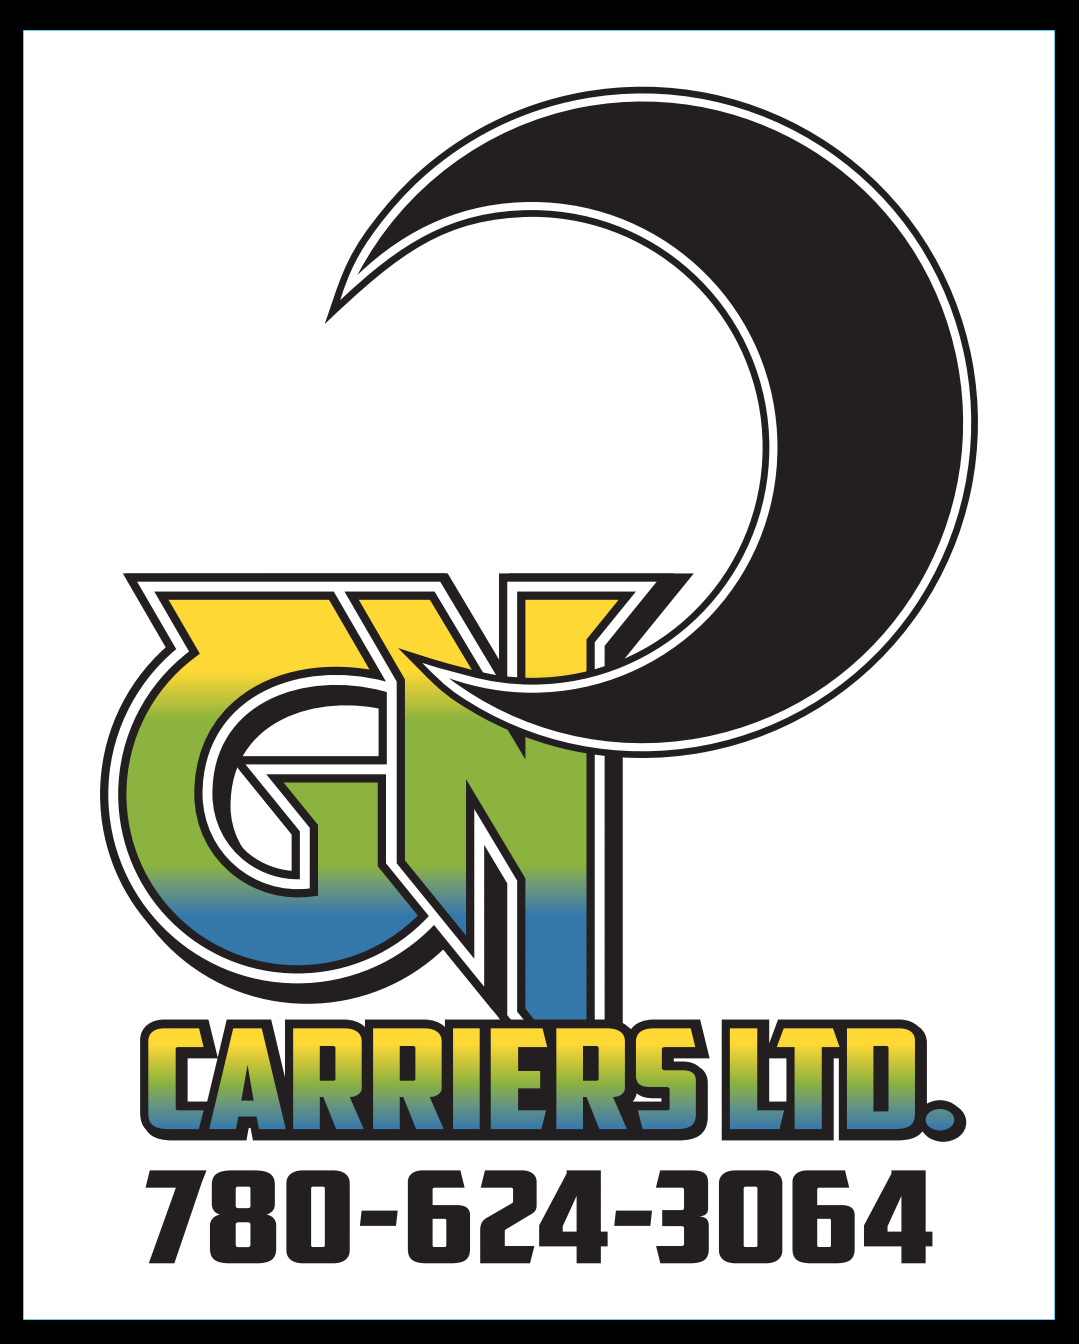 GN Carriers Ltd